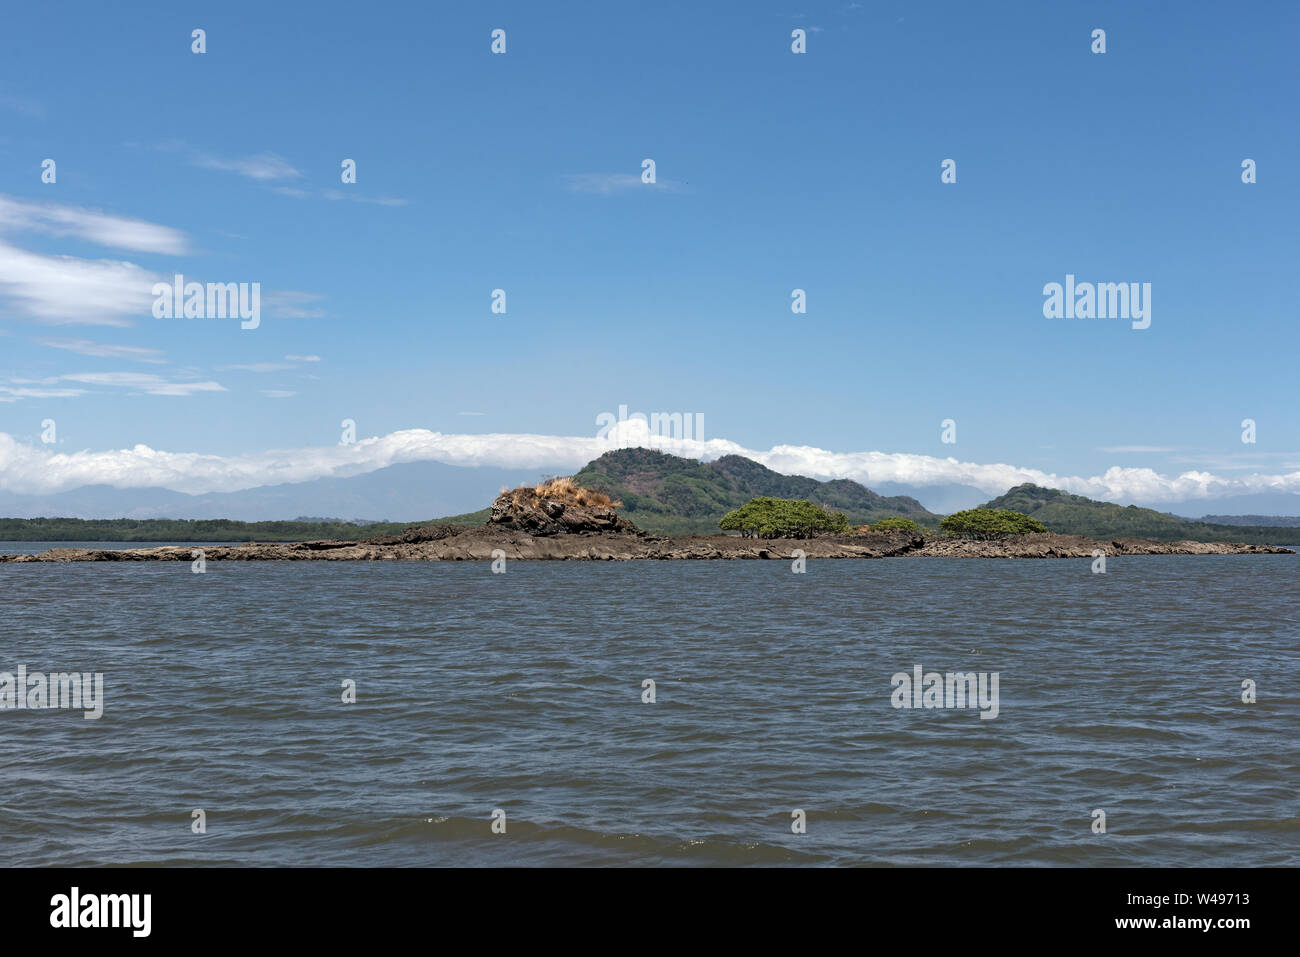 Islands in the Bahia de los Muertos the estuary of the Rio Platanal Panama Stock Photo